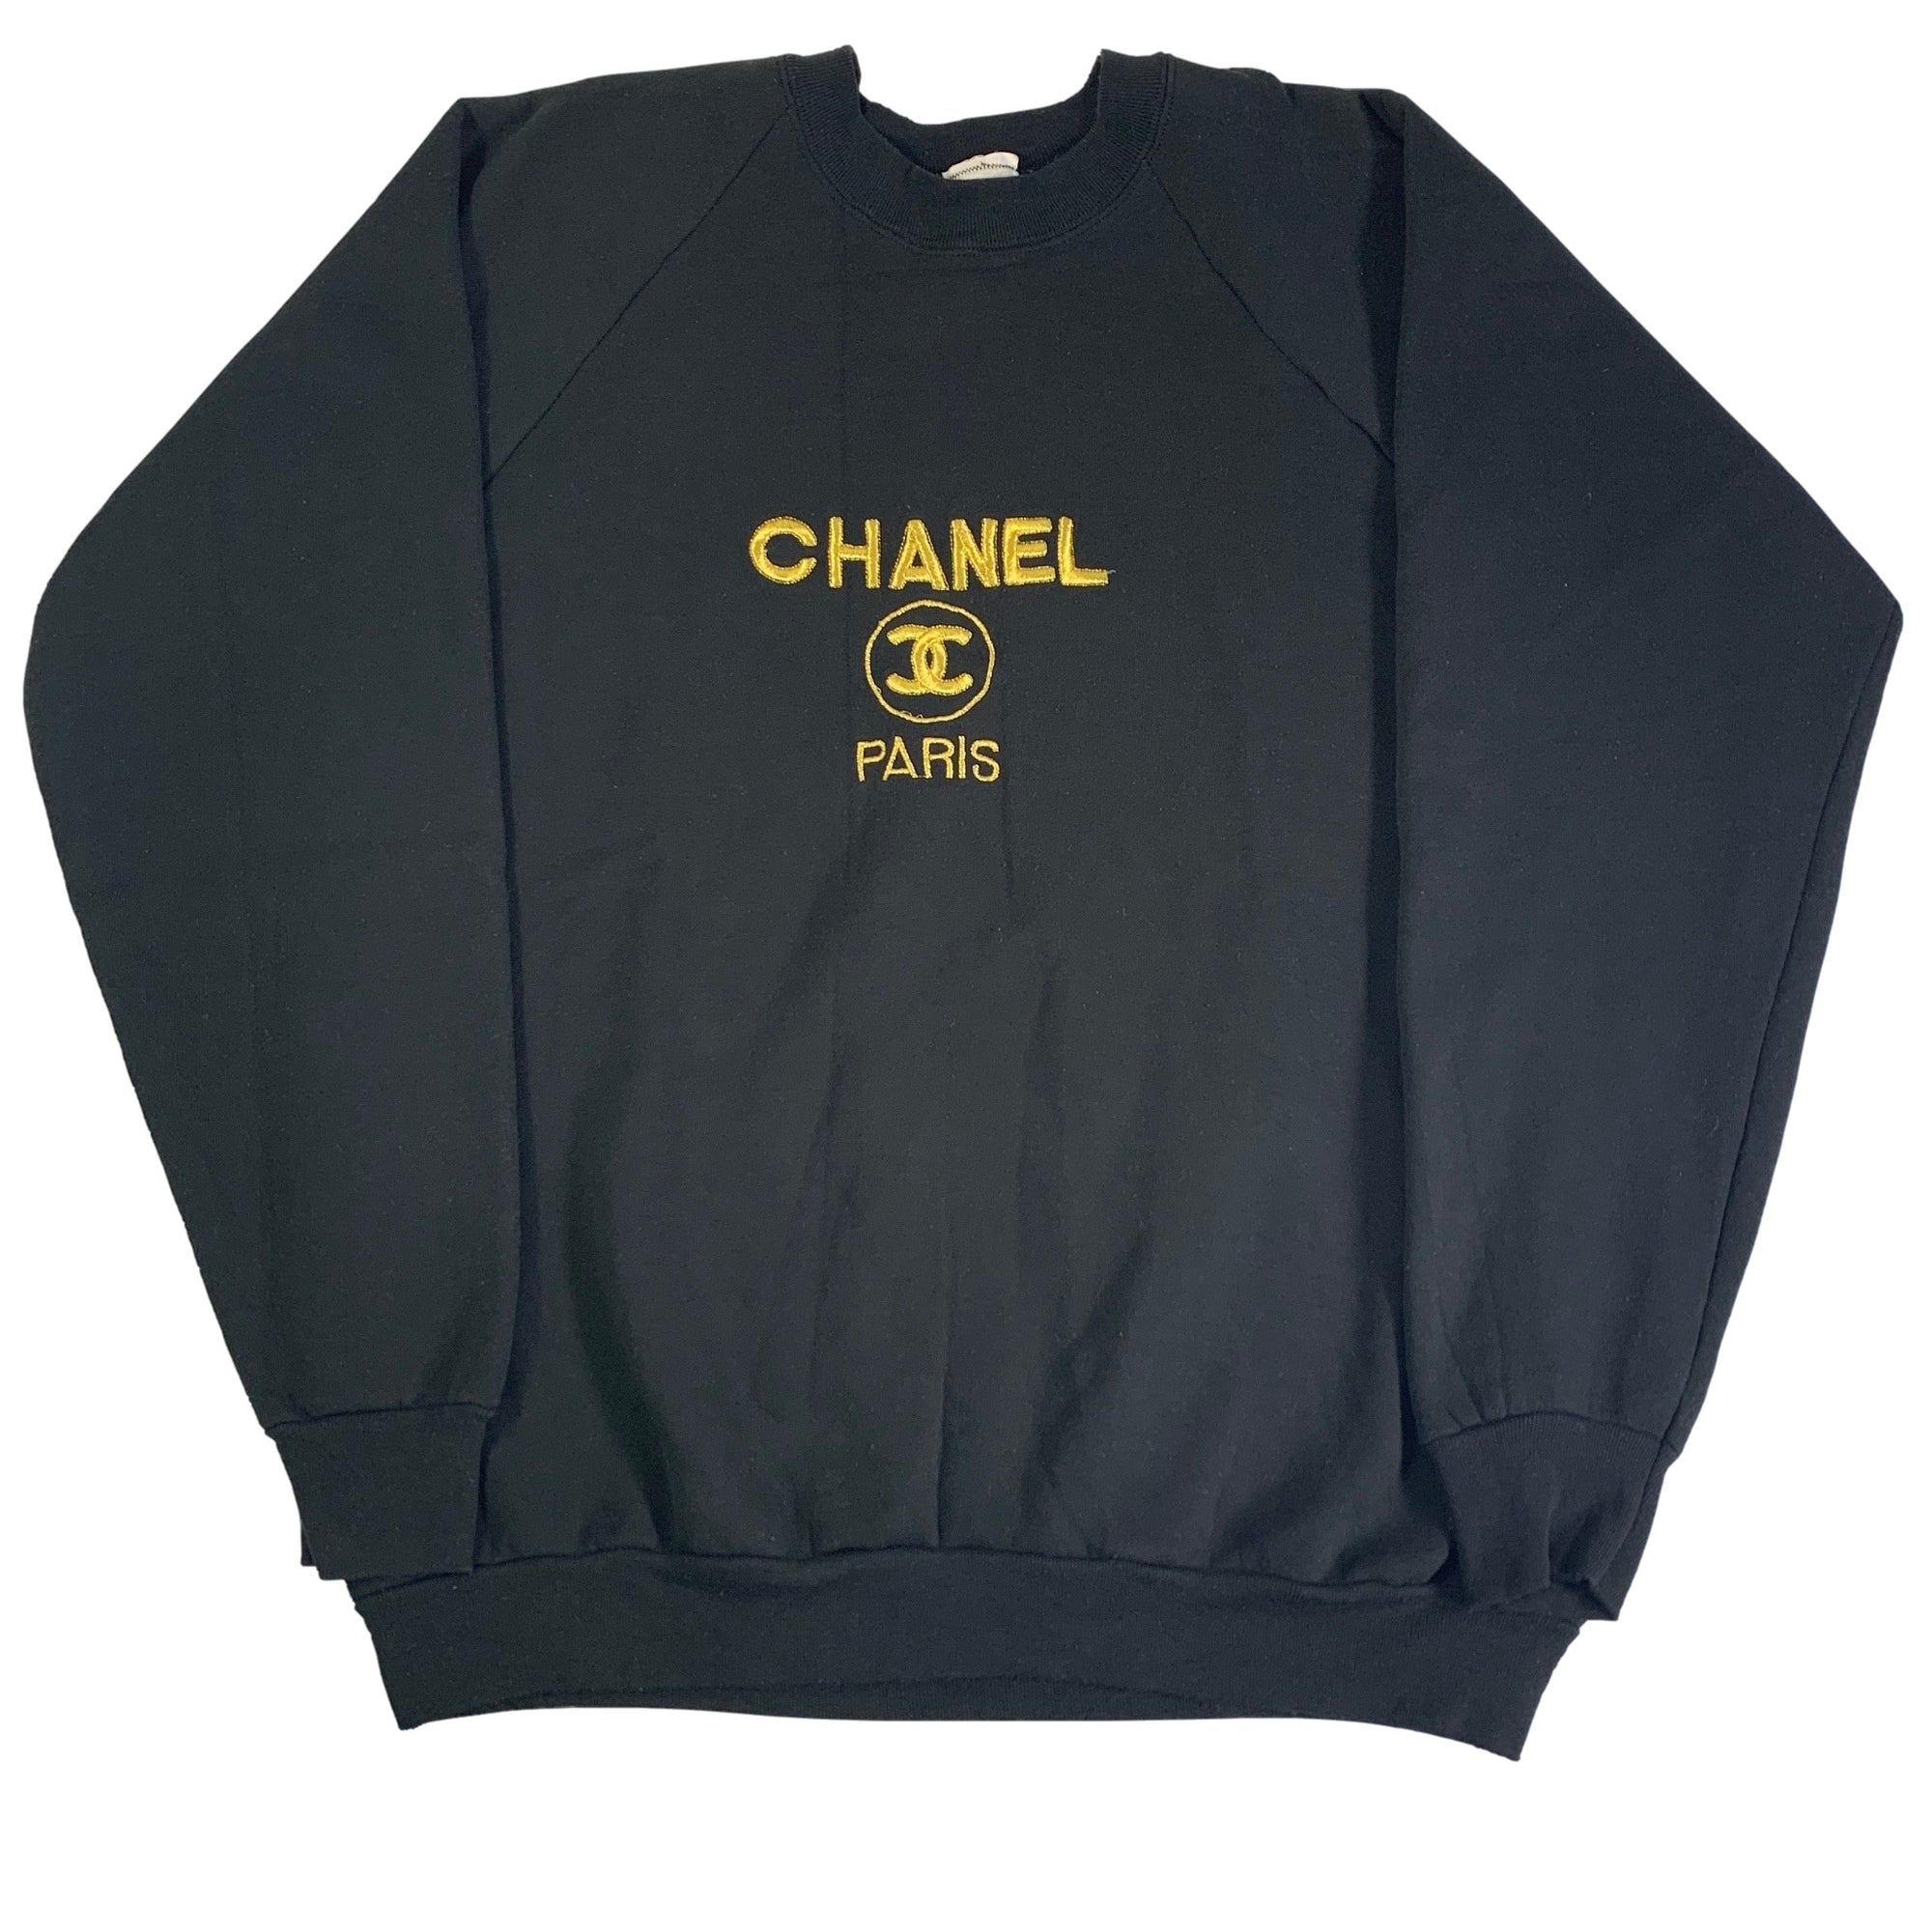 Vintage Chanel "Paris" Crewneck Sweatshirt - jointcustodydc